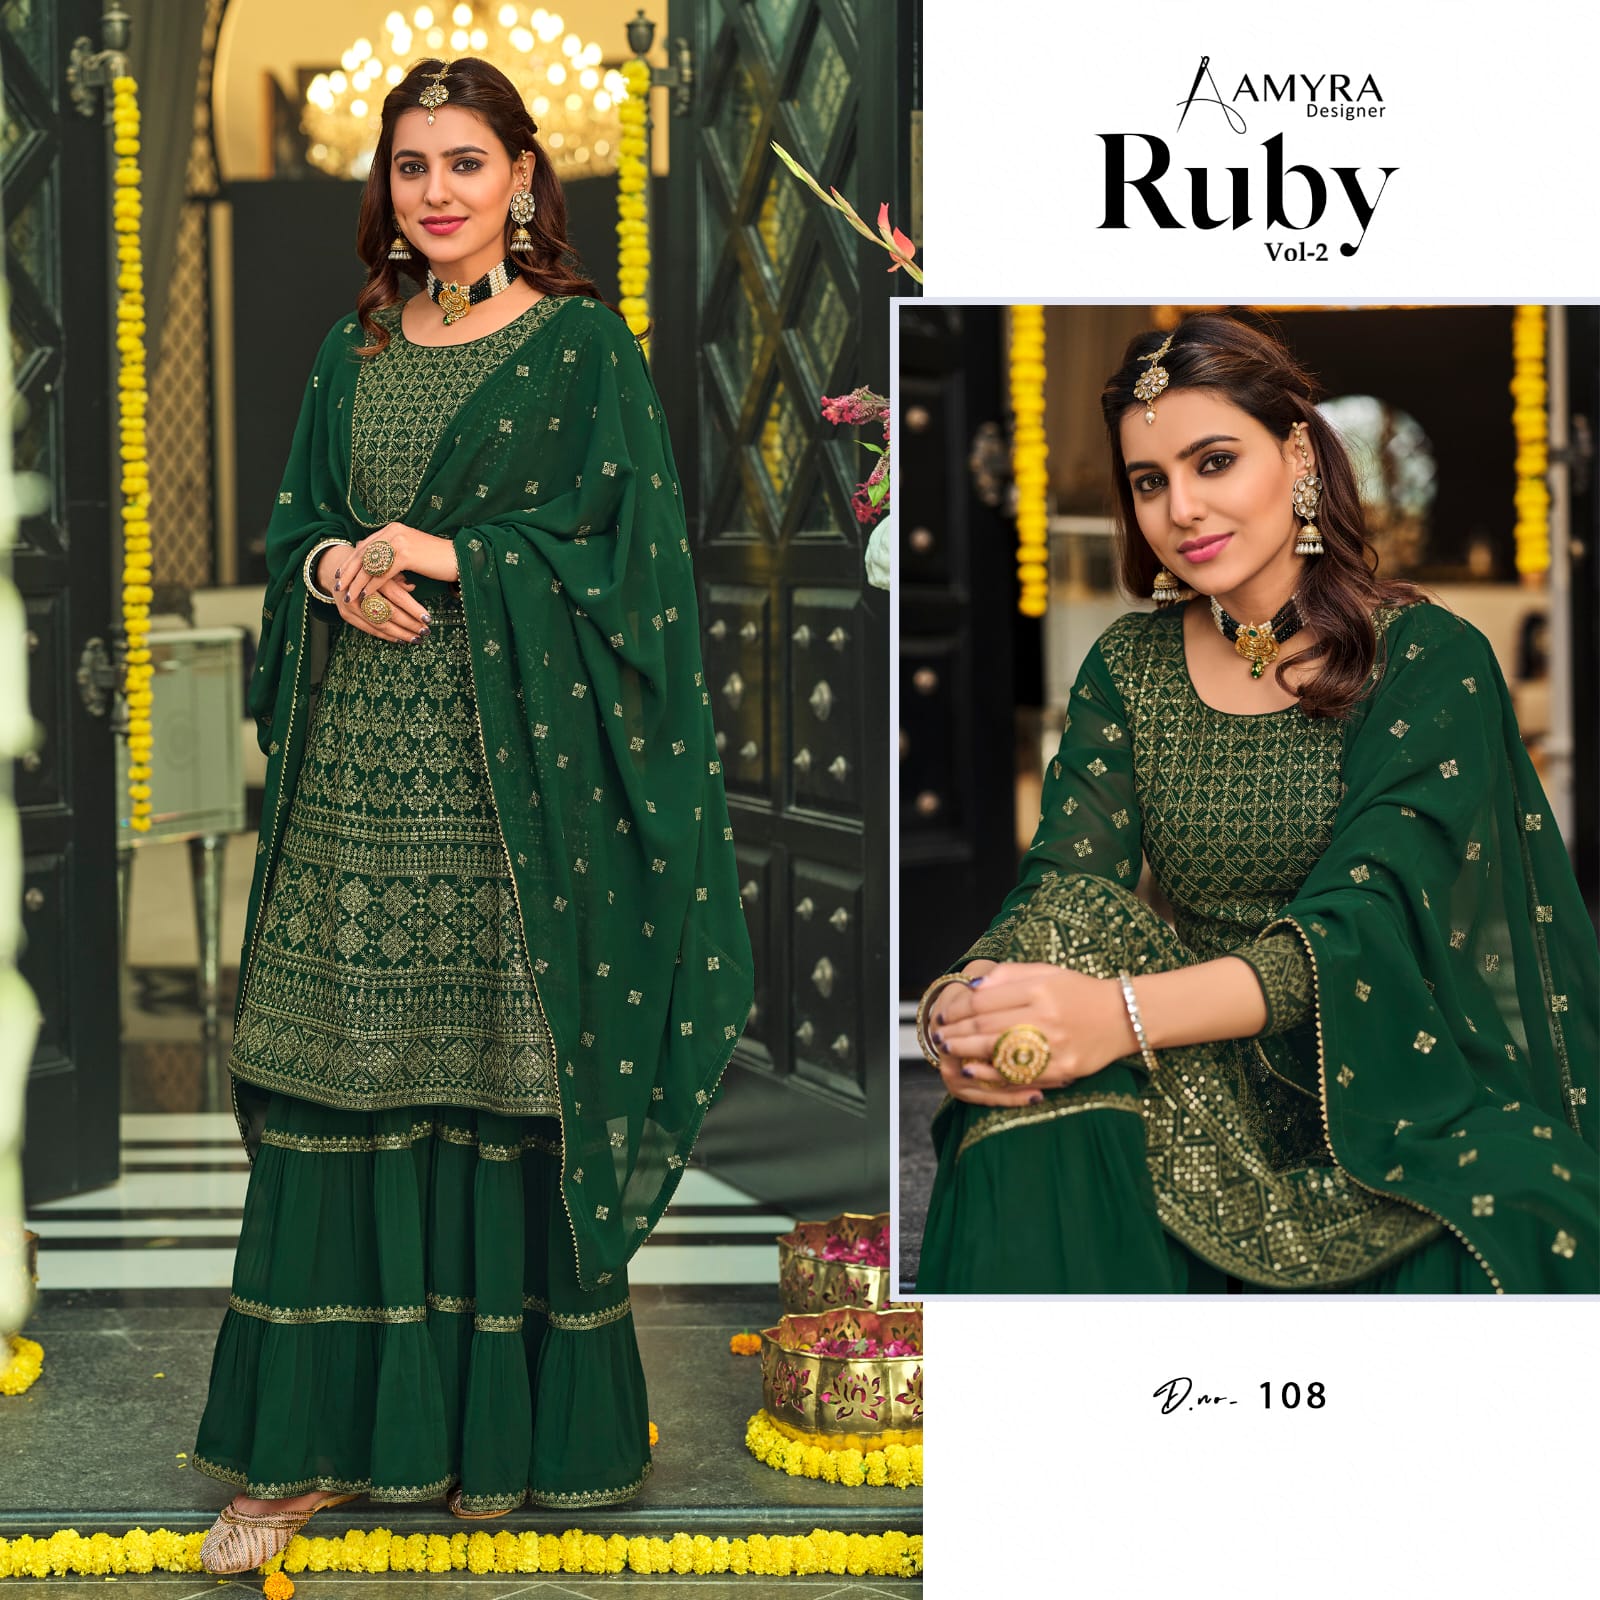 amyra designer Ruby vol 2  georgette graceful look salwar suit catalog